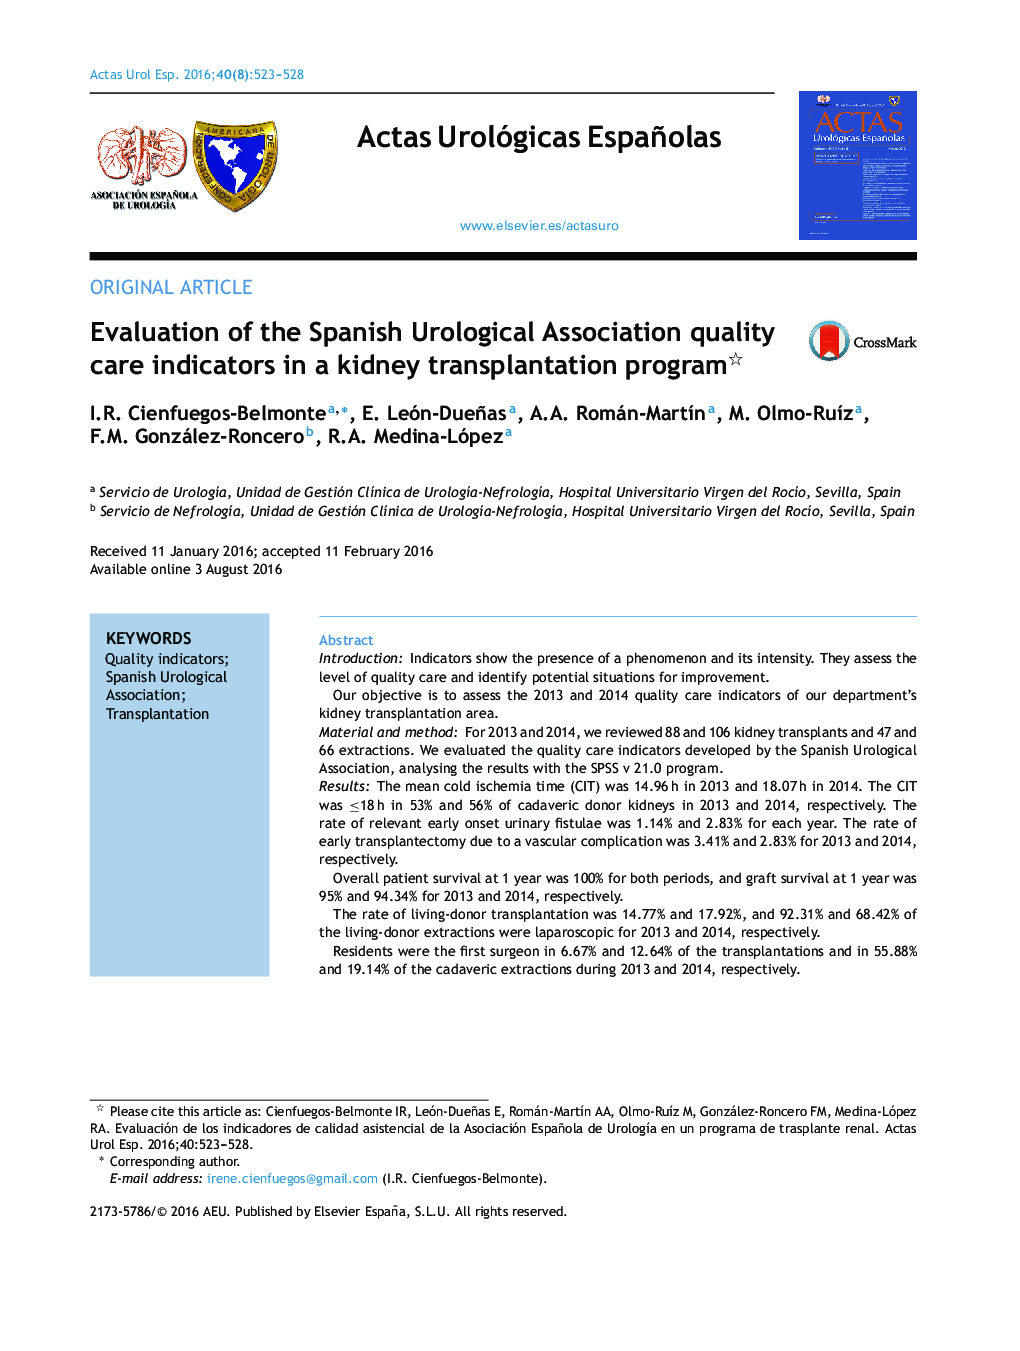 Evaluation of the Spanish Urological Association quality care indicators in a kidney transplantation program 